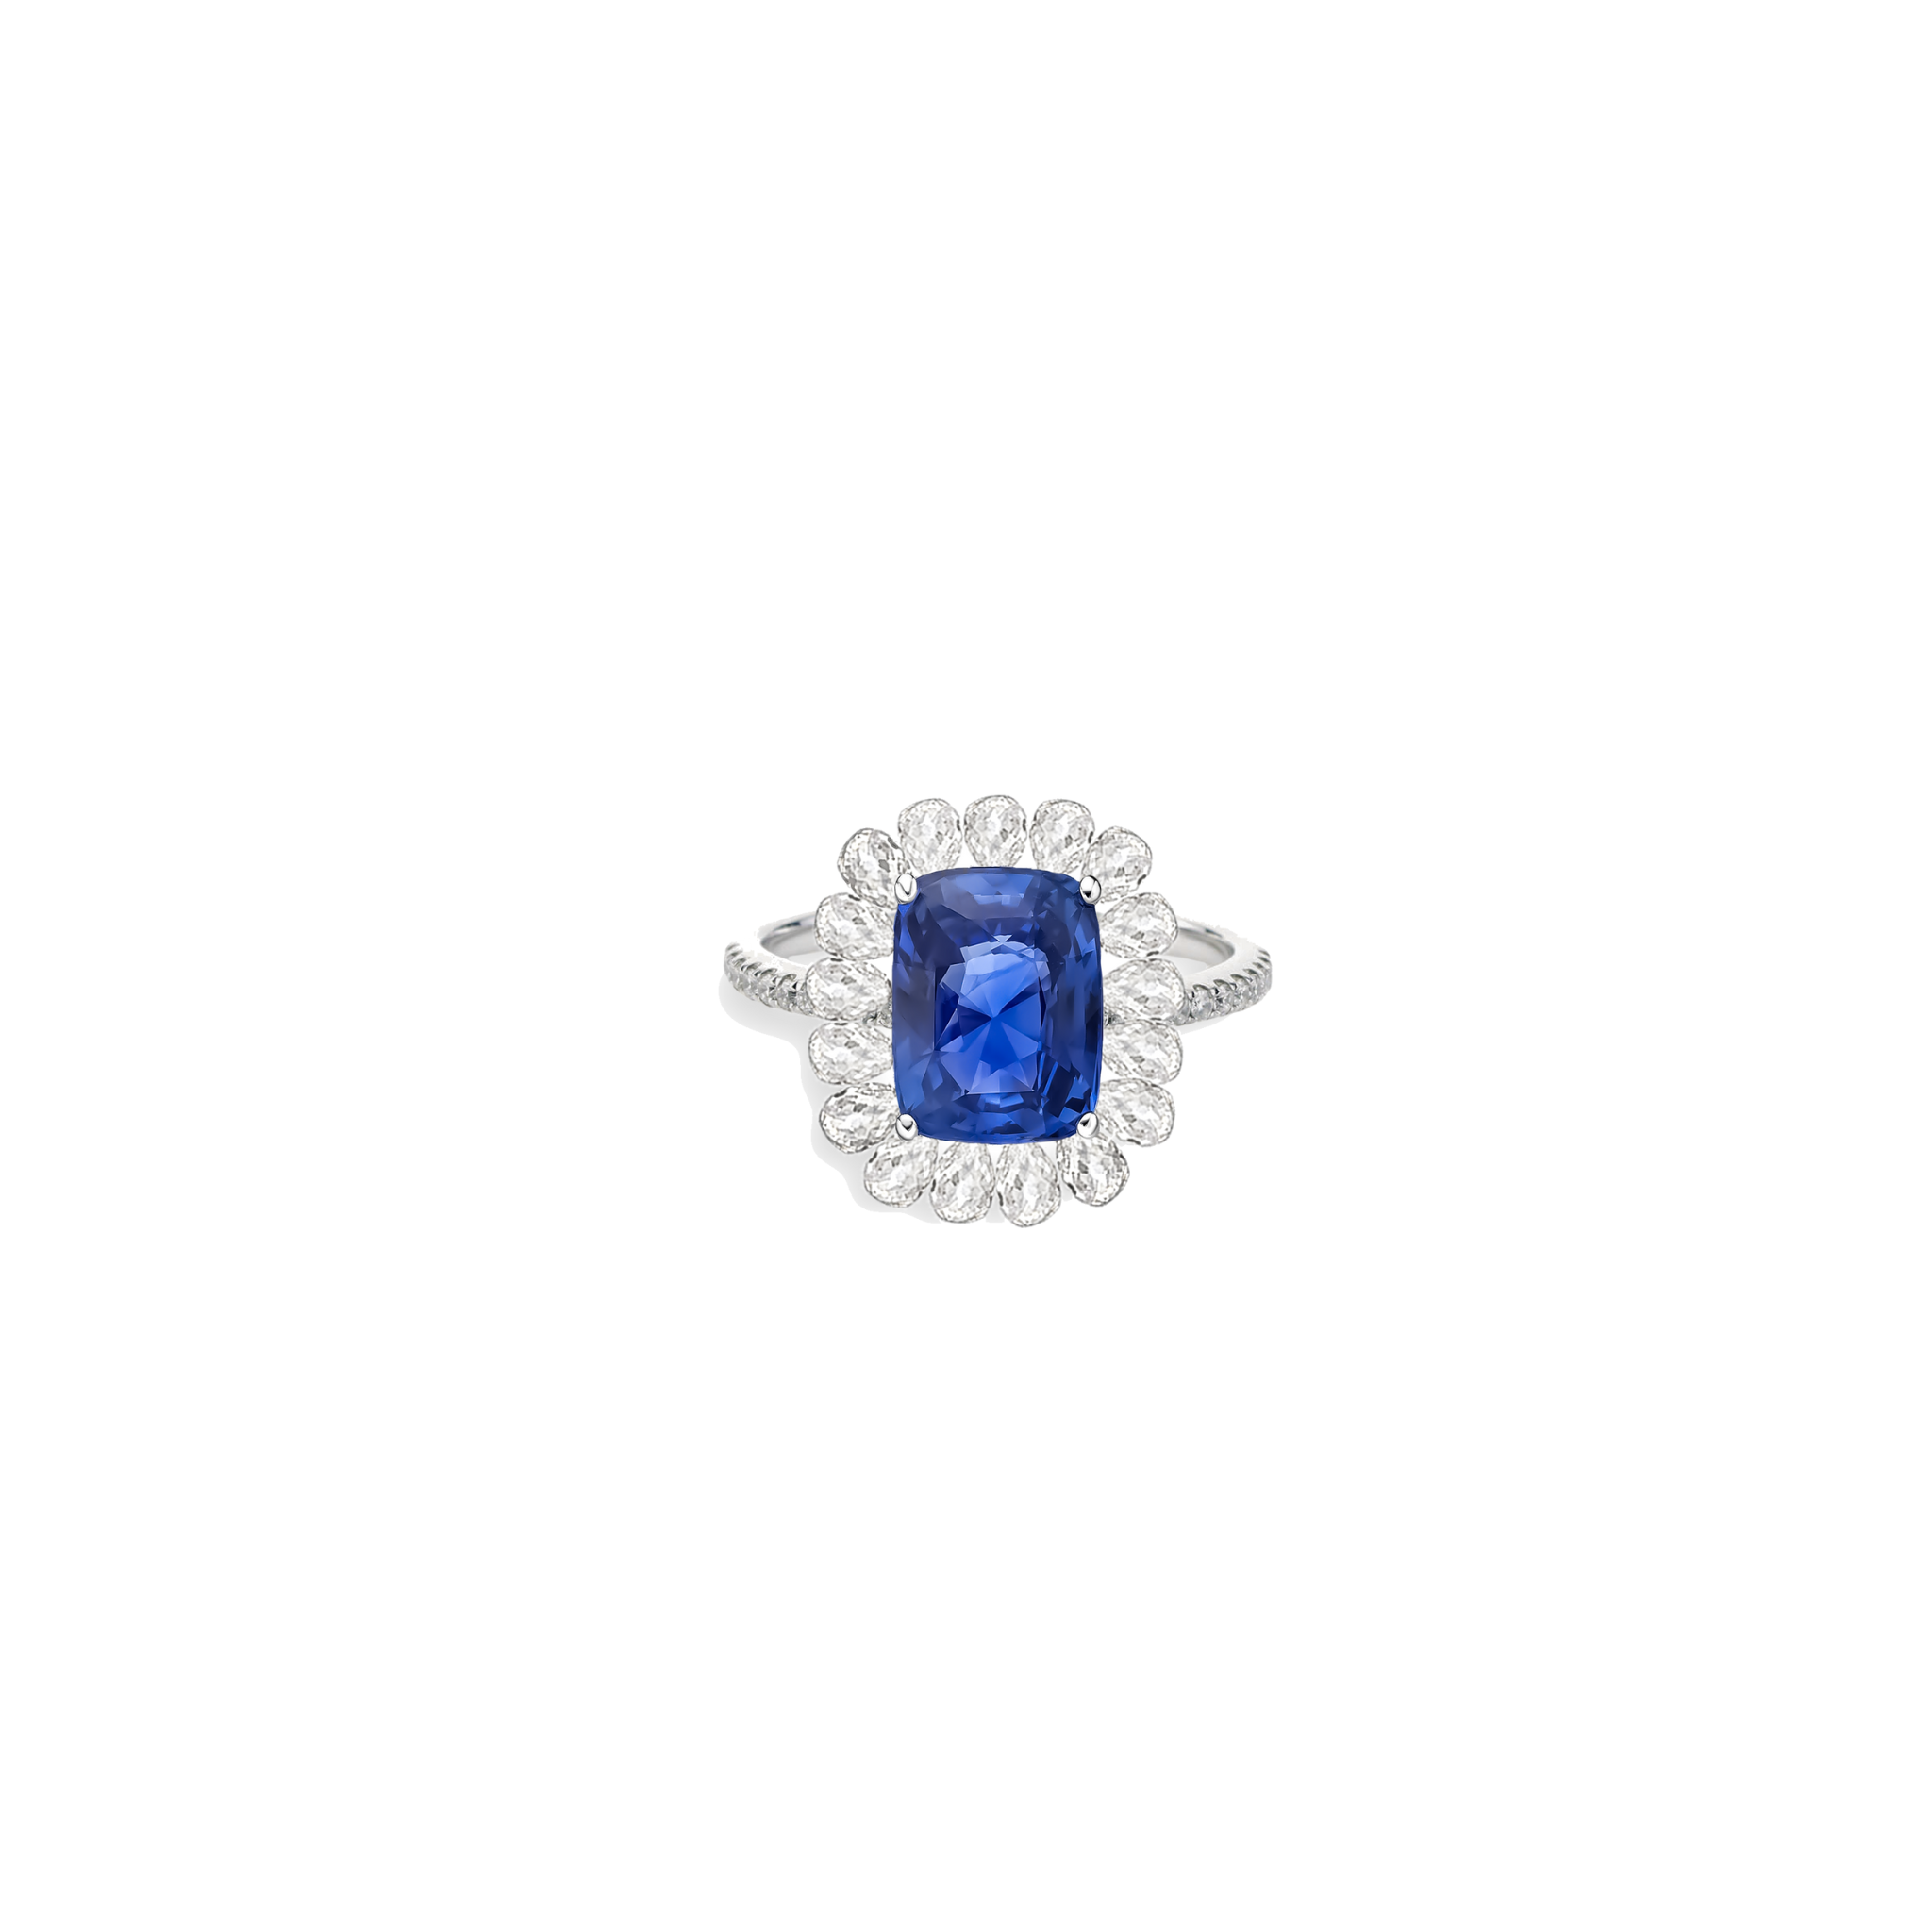 BLUE SAPPHIRE AND BRIOLETTE DIAMOND RING